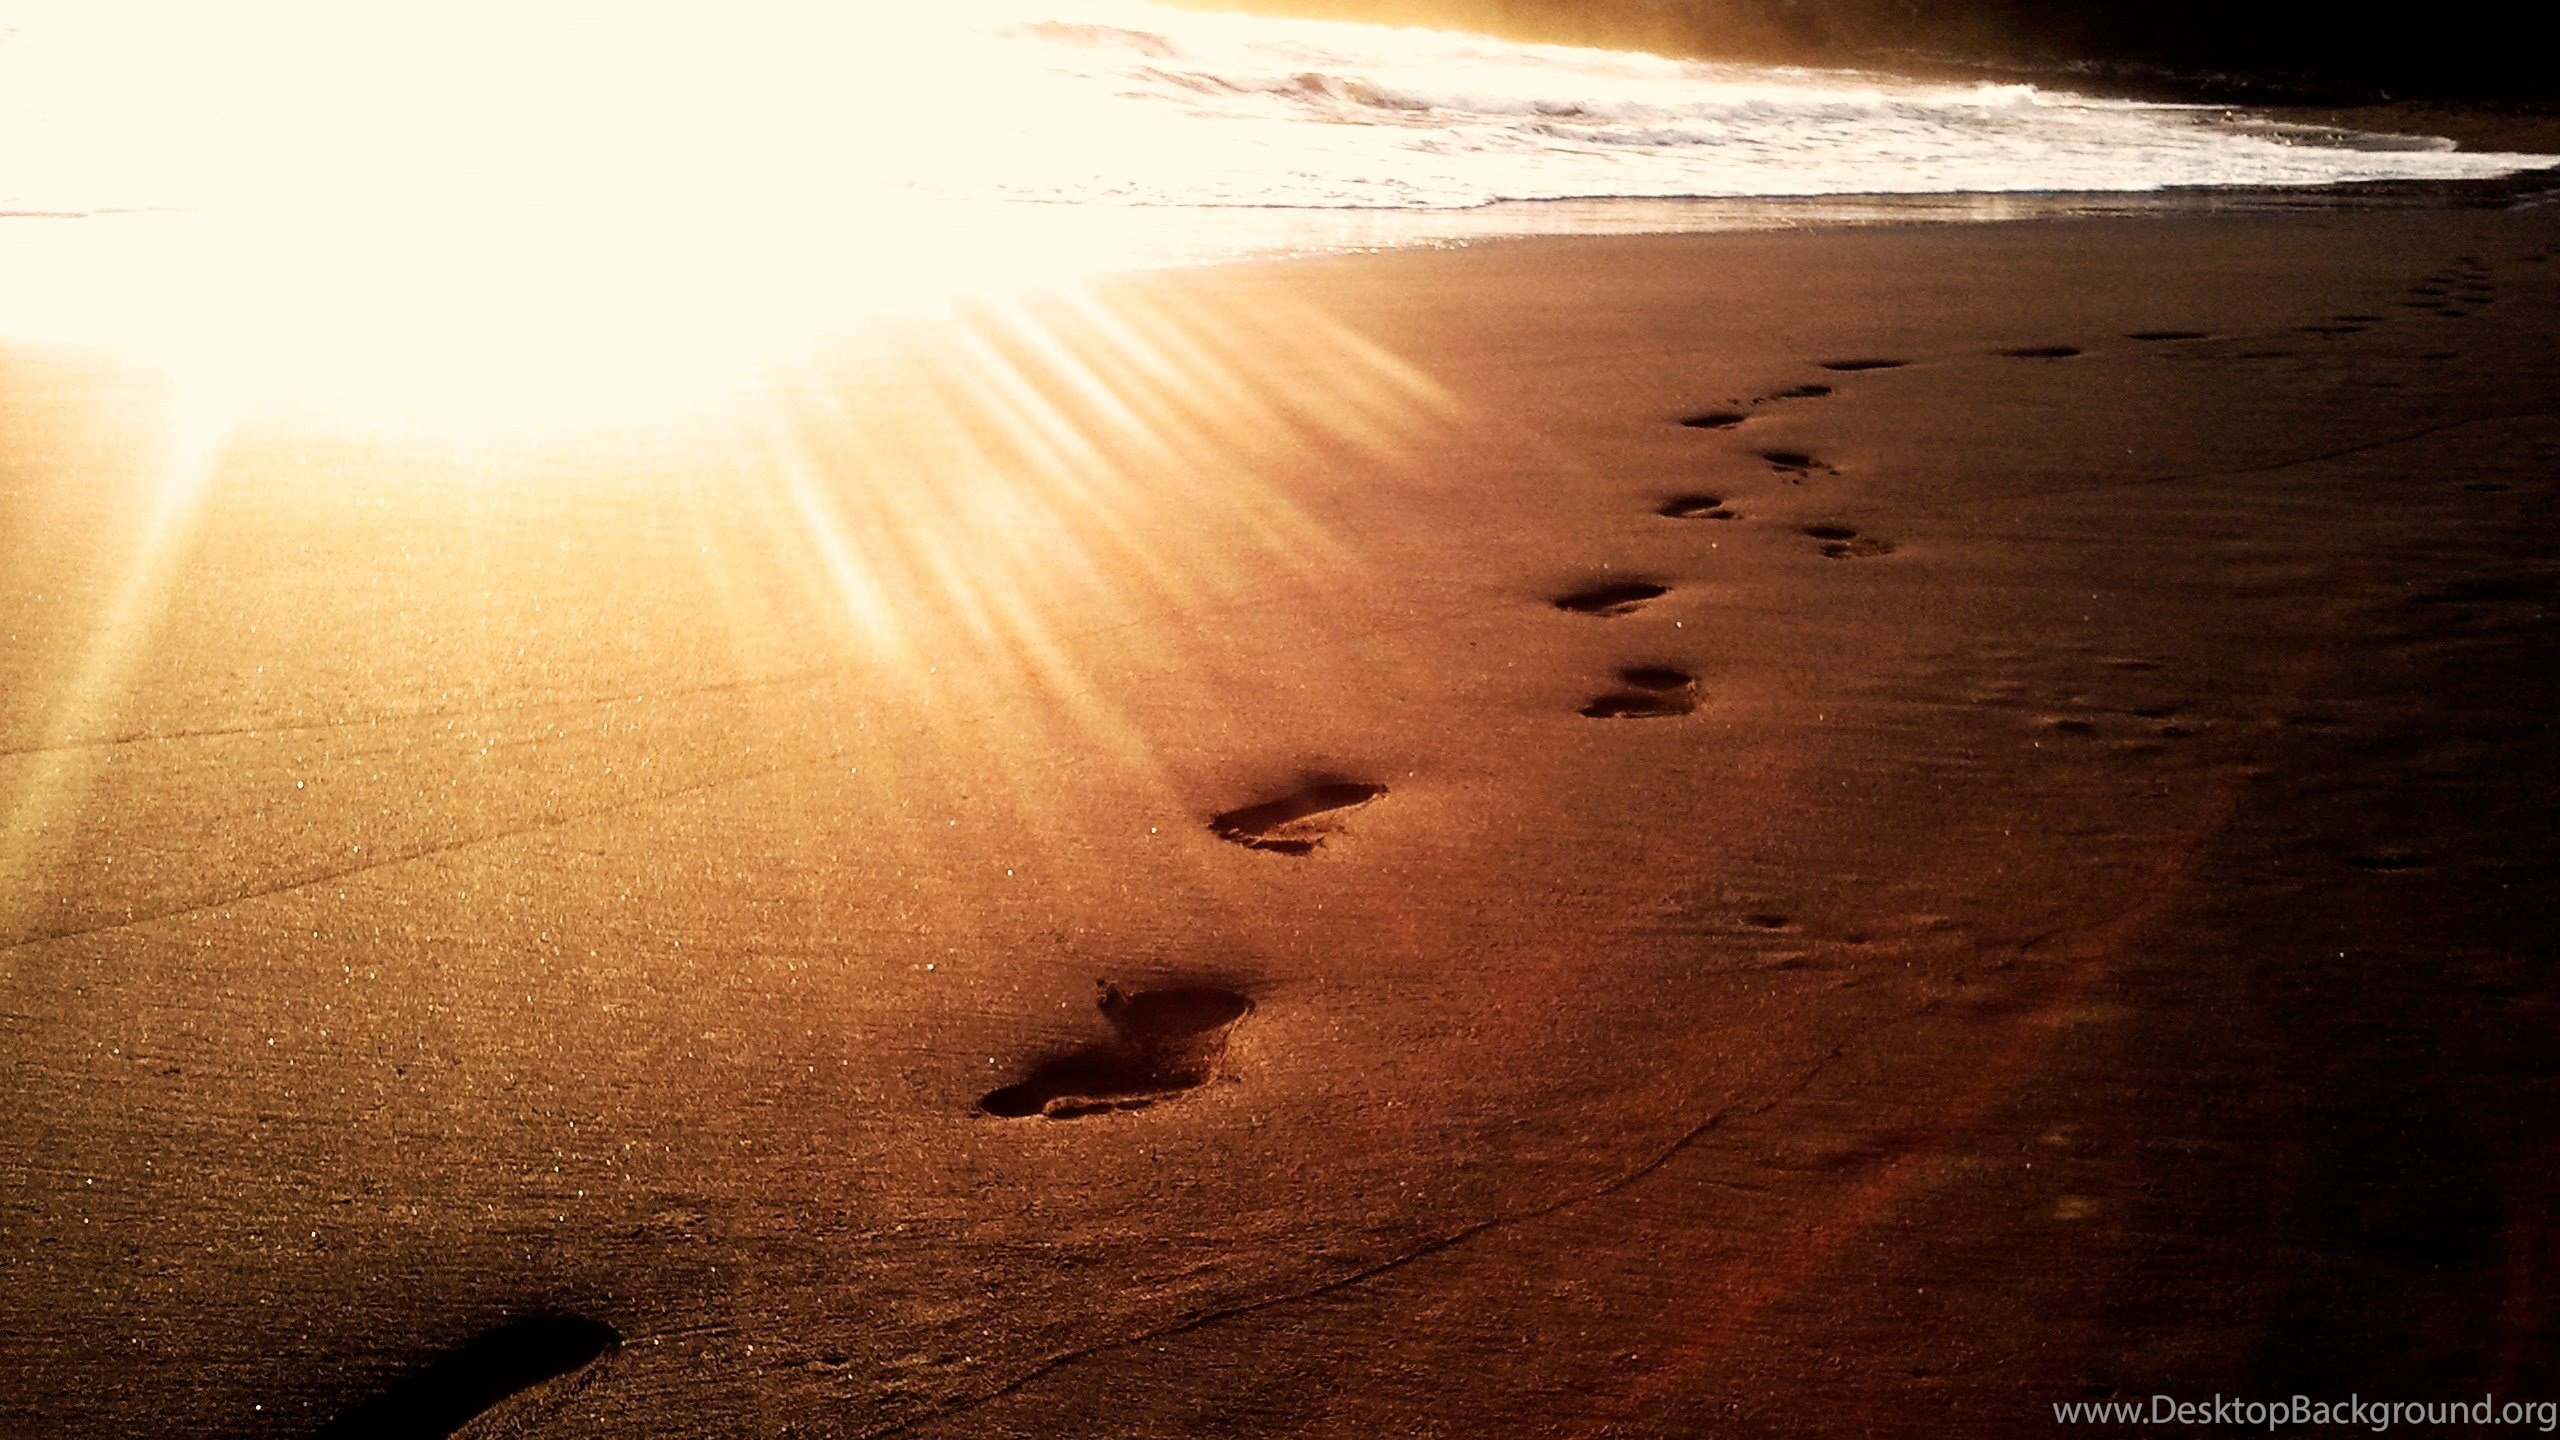 Footprints In The Sand Wallpaper HD Image New Desktop Background